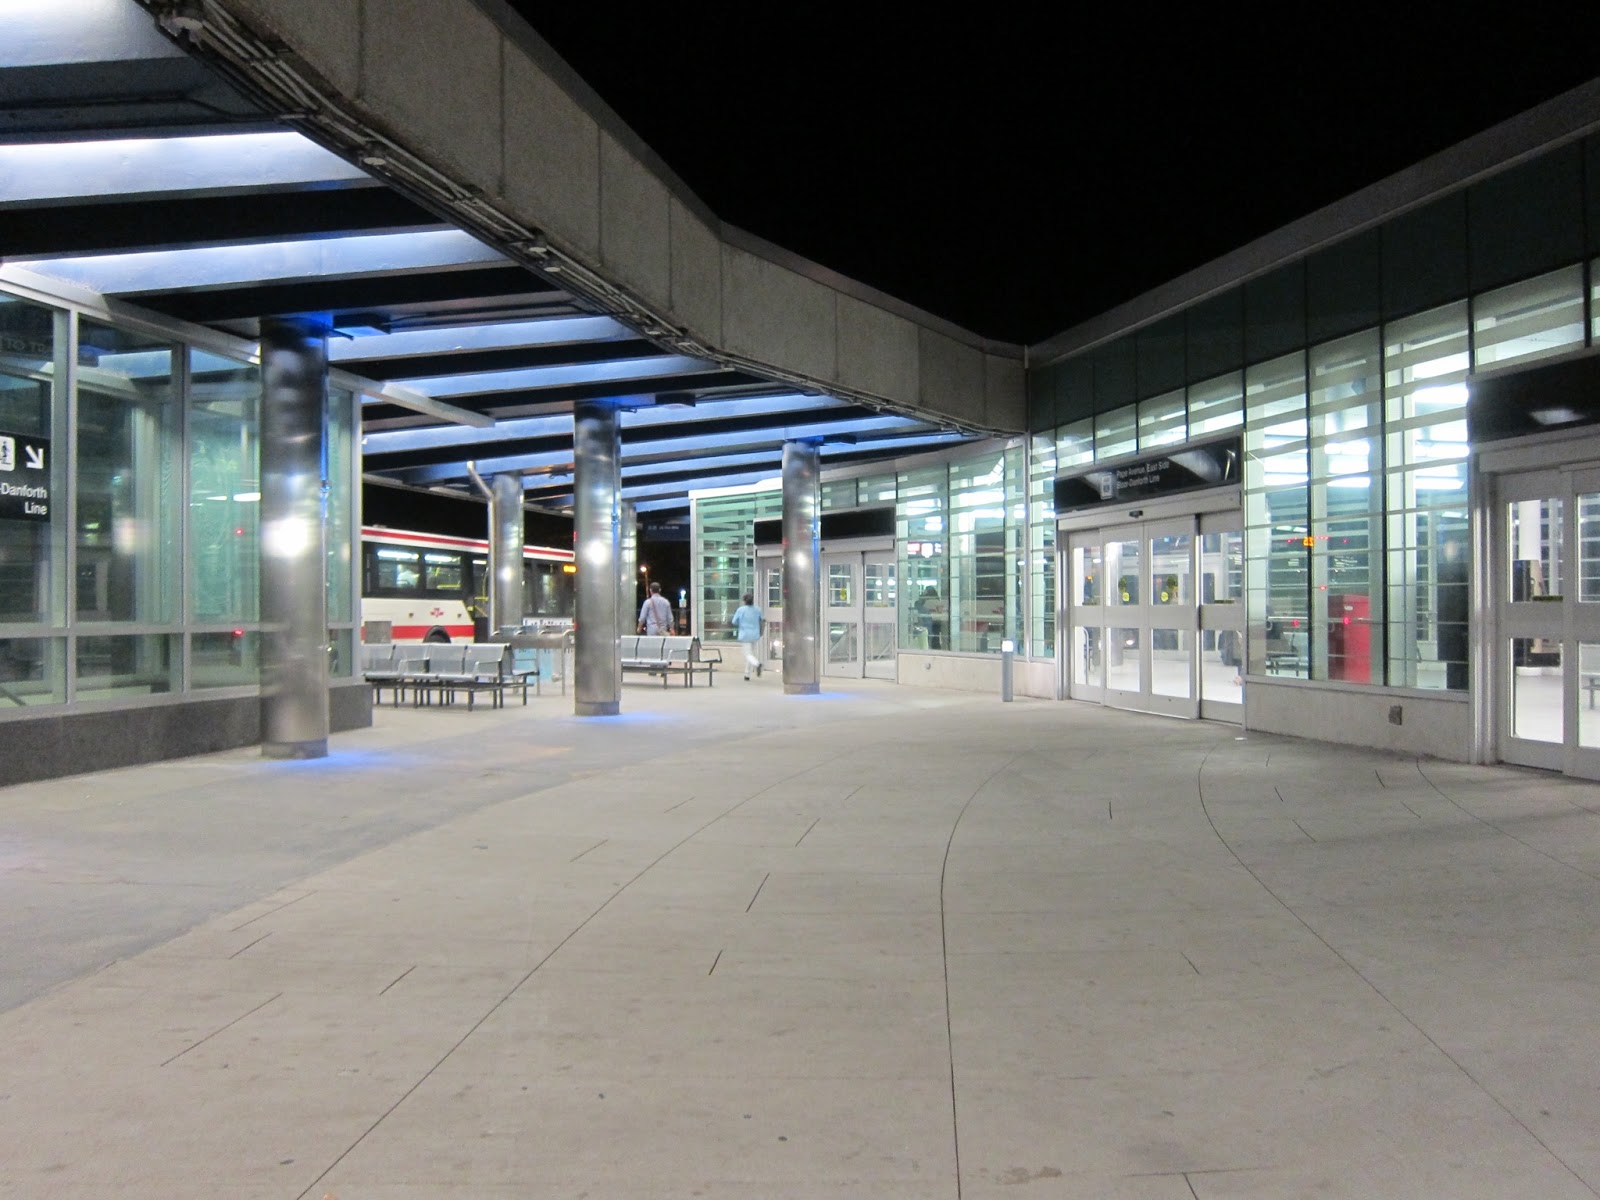 Pape station bus platform